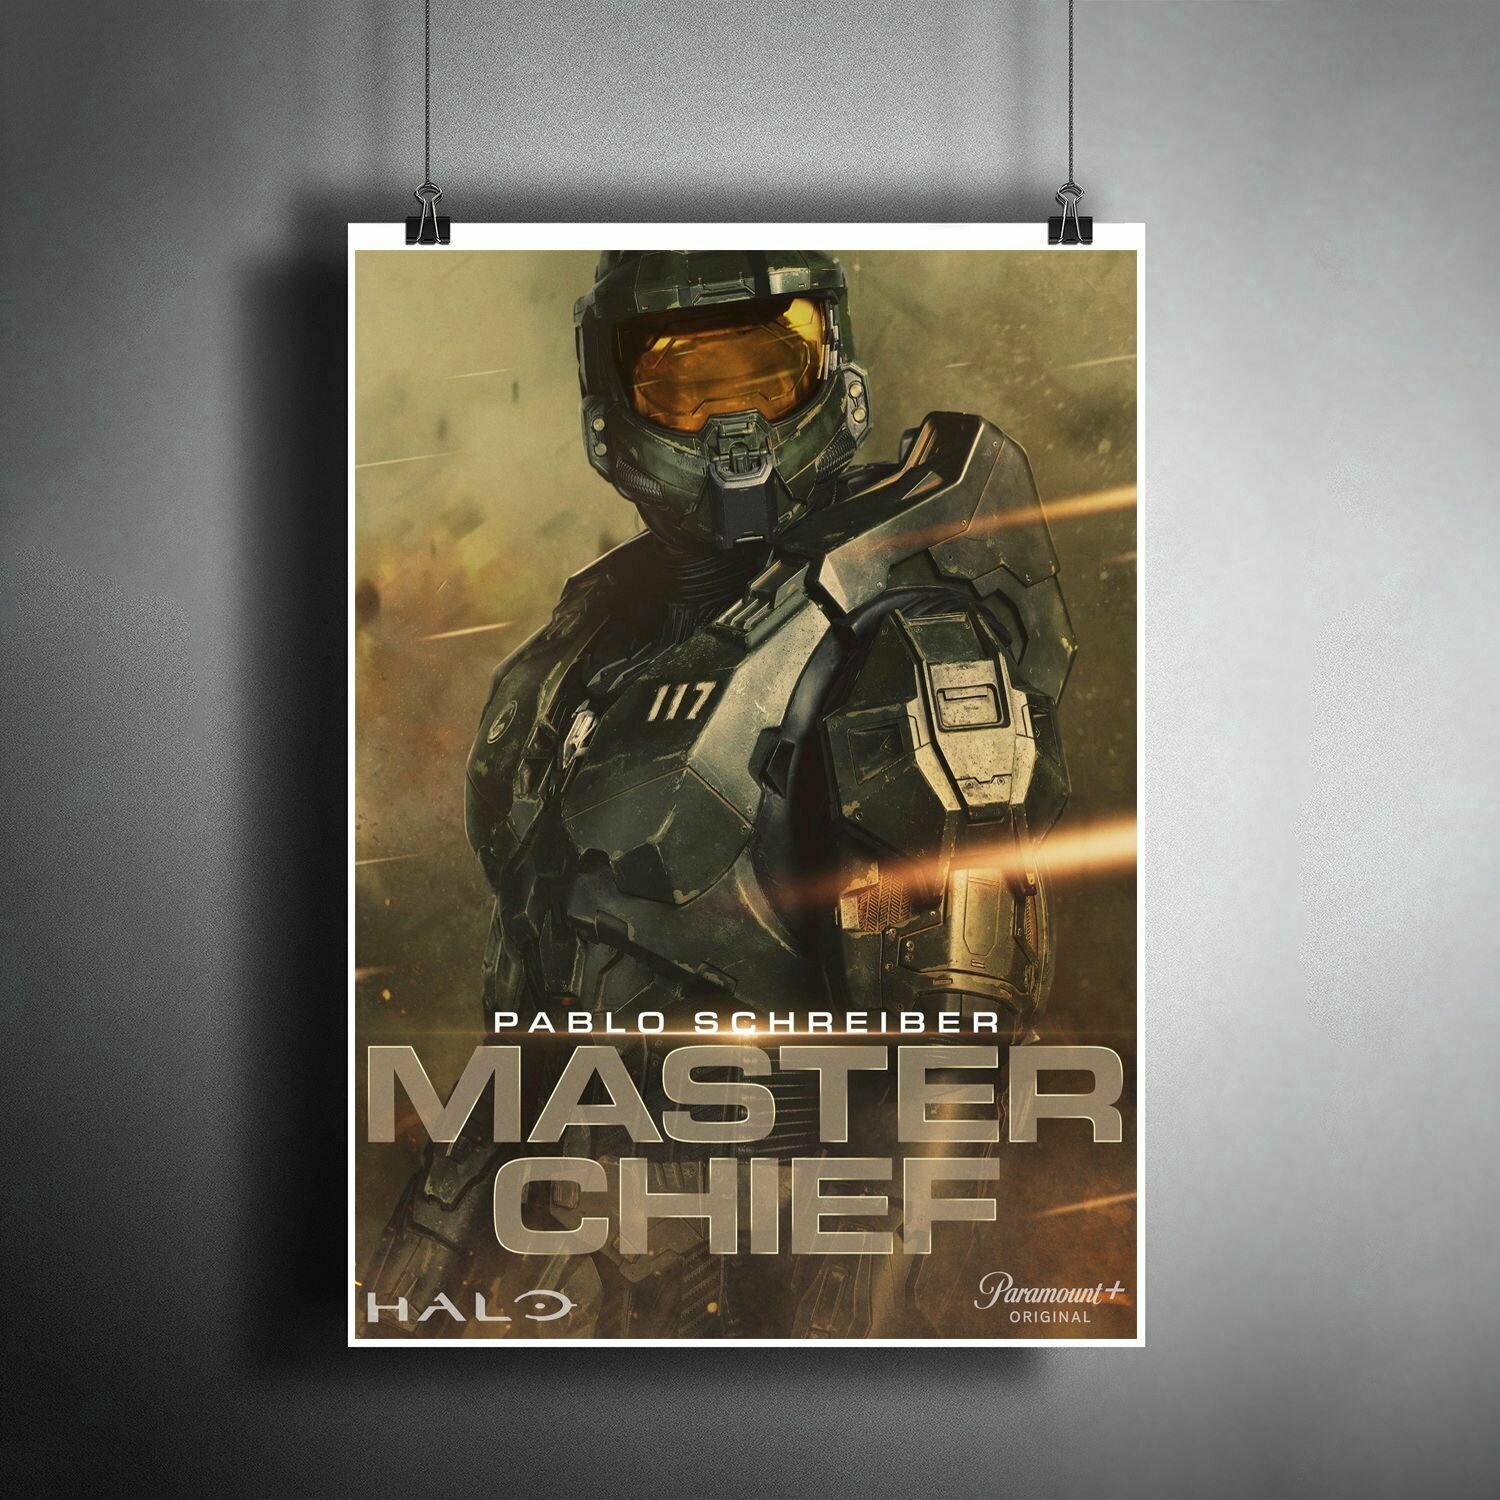 Постер плакат для интерьера "Сериал: Halo (Мастер Чиф)" / Декор дома, офиса, комнаты, квартиры, детской A3 (297 x 420 мм)